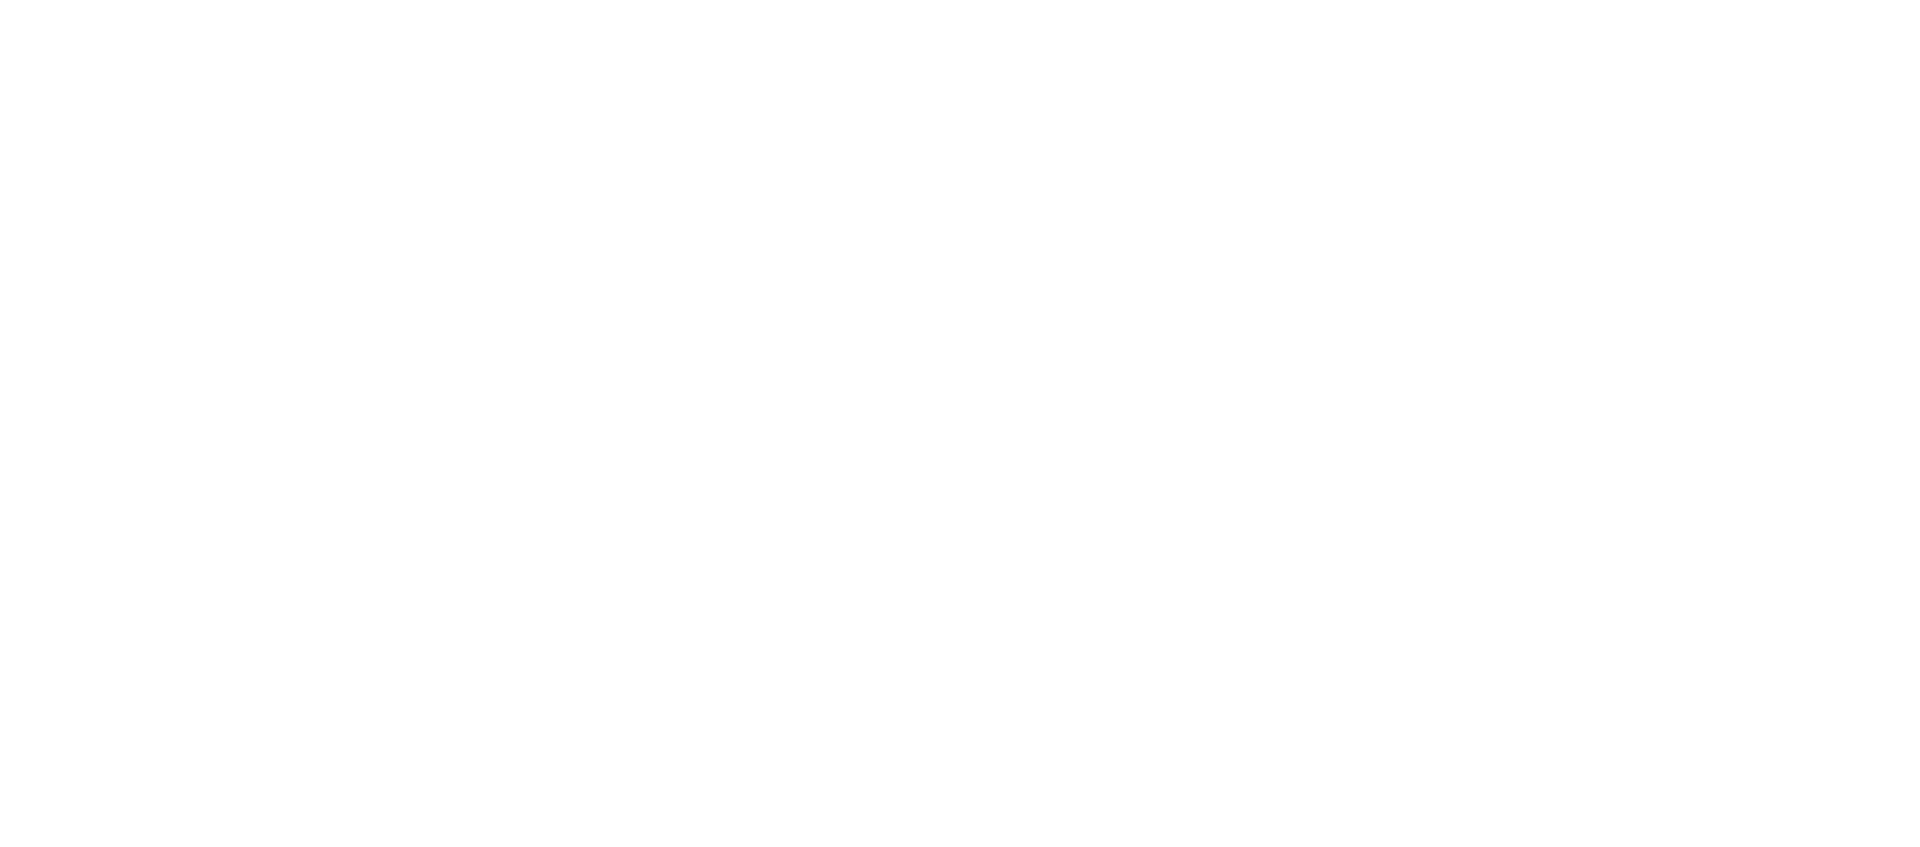 sacred wind photography